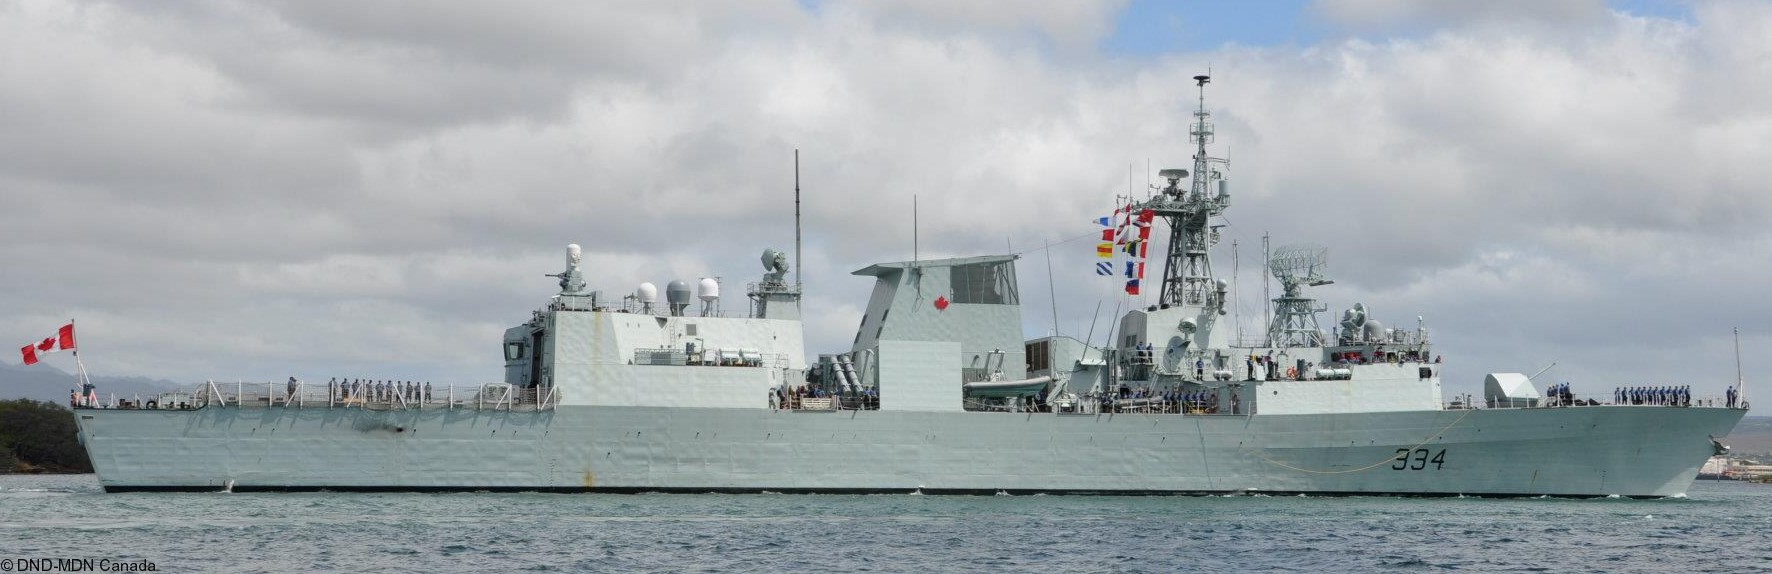 ffh-334 hmcs regina halifax class helicopter patrol frigate ncsm royal canadian navy 62